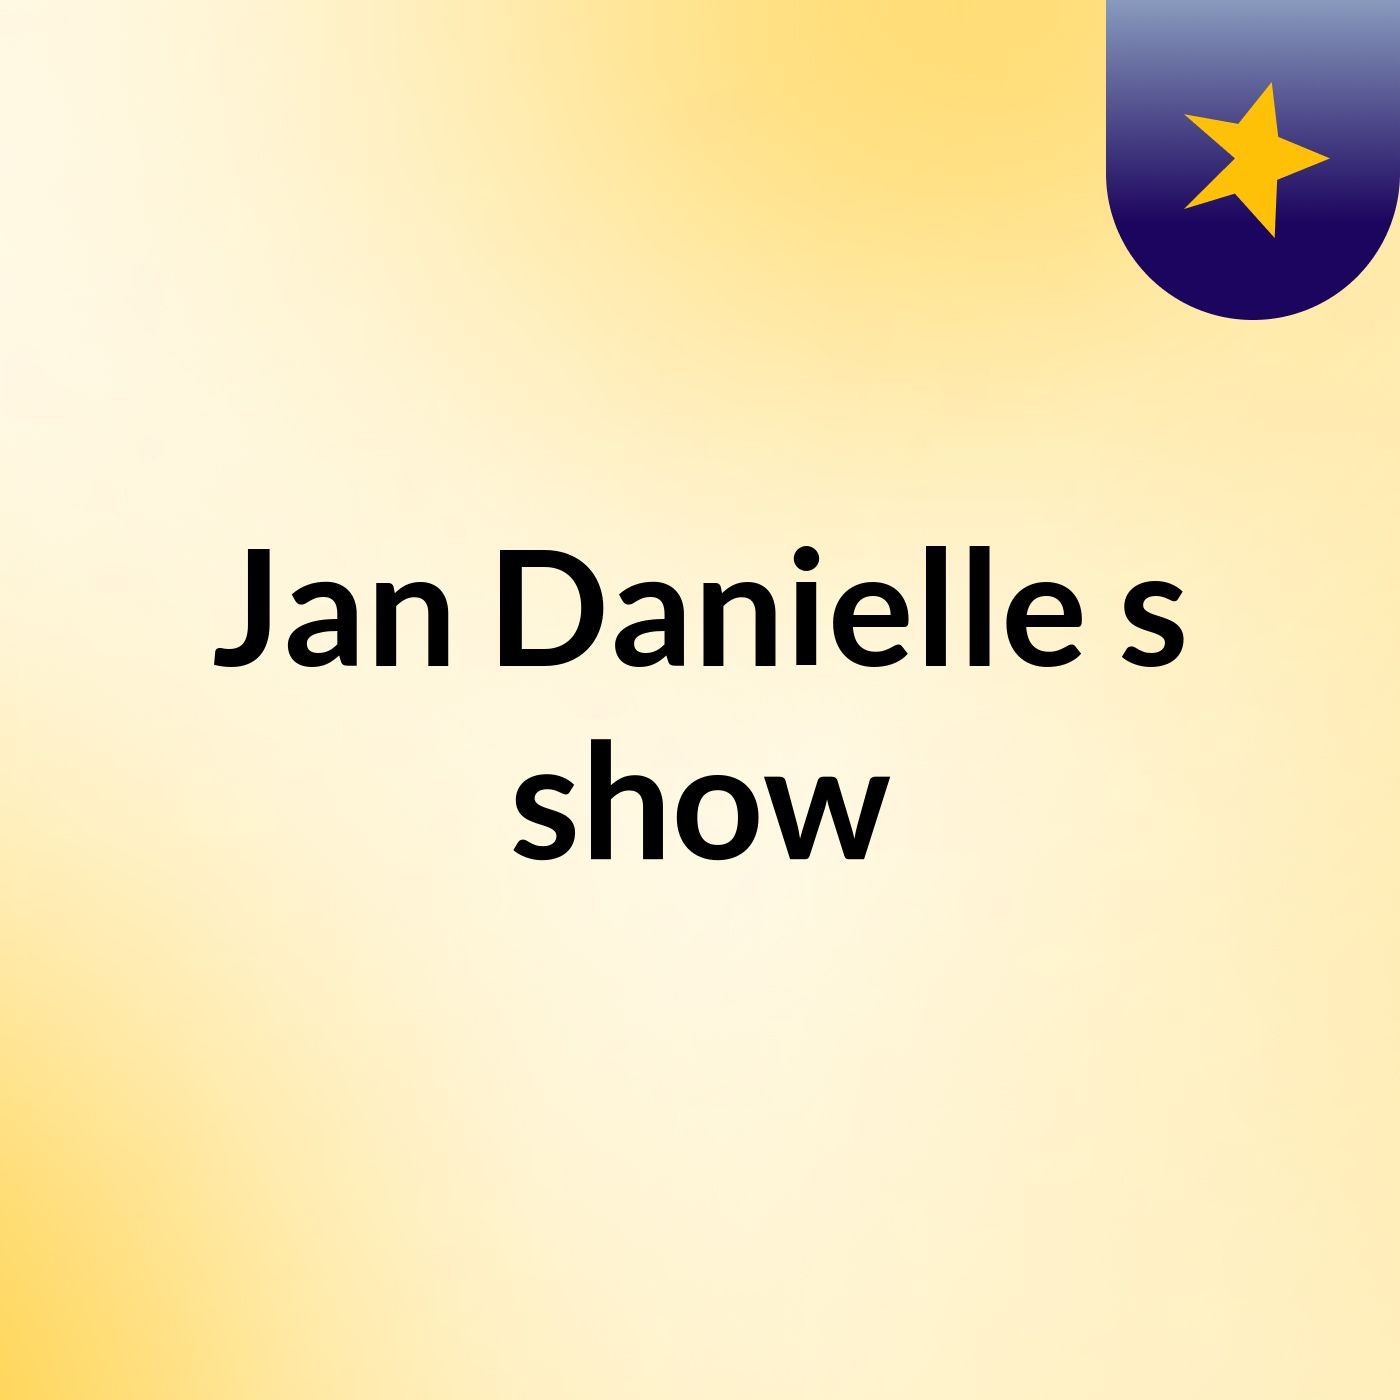 Jan Danielle's show